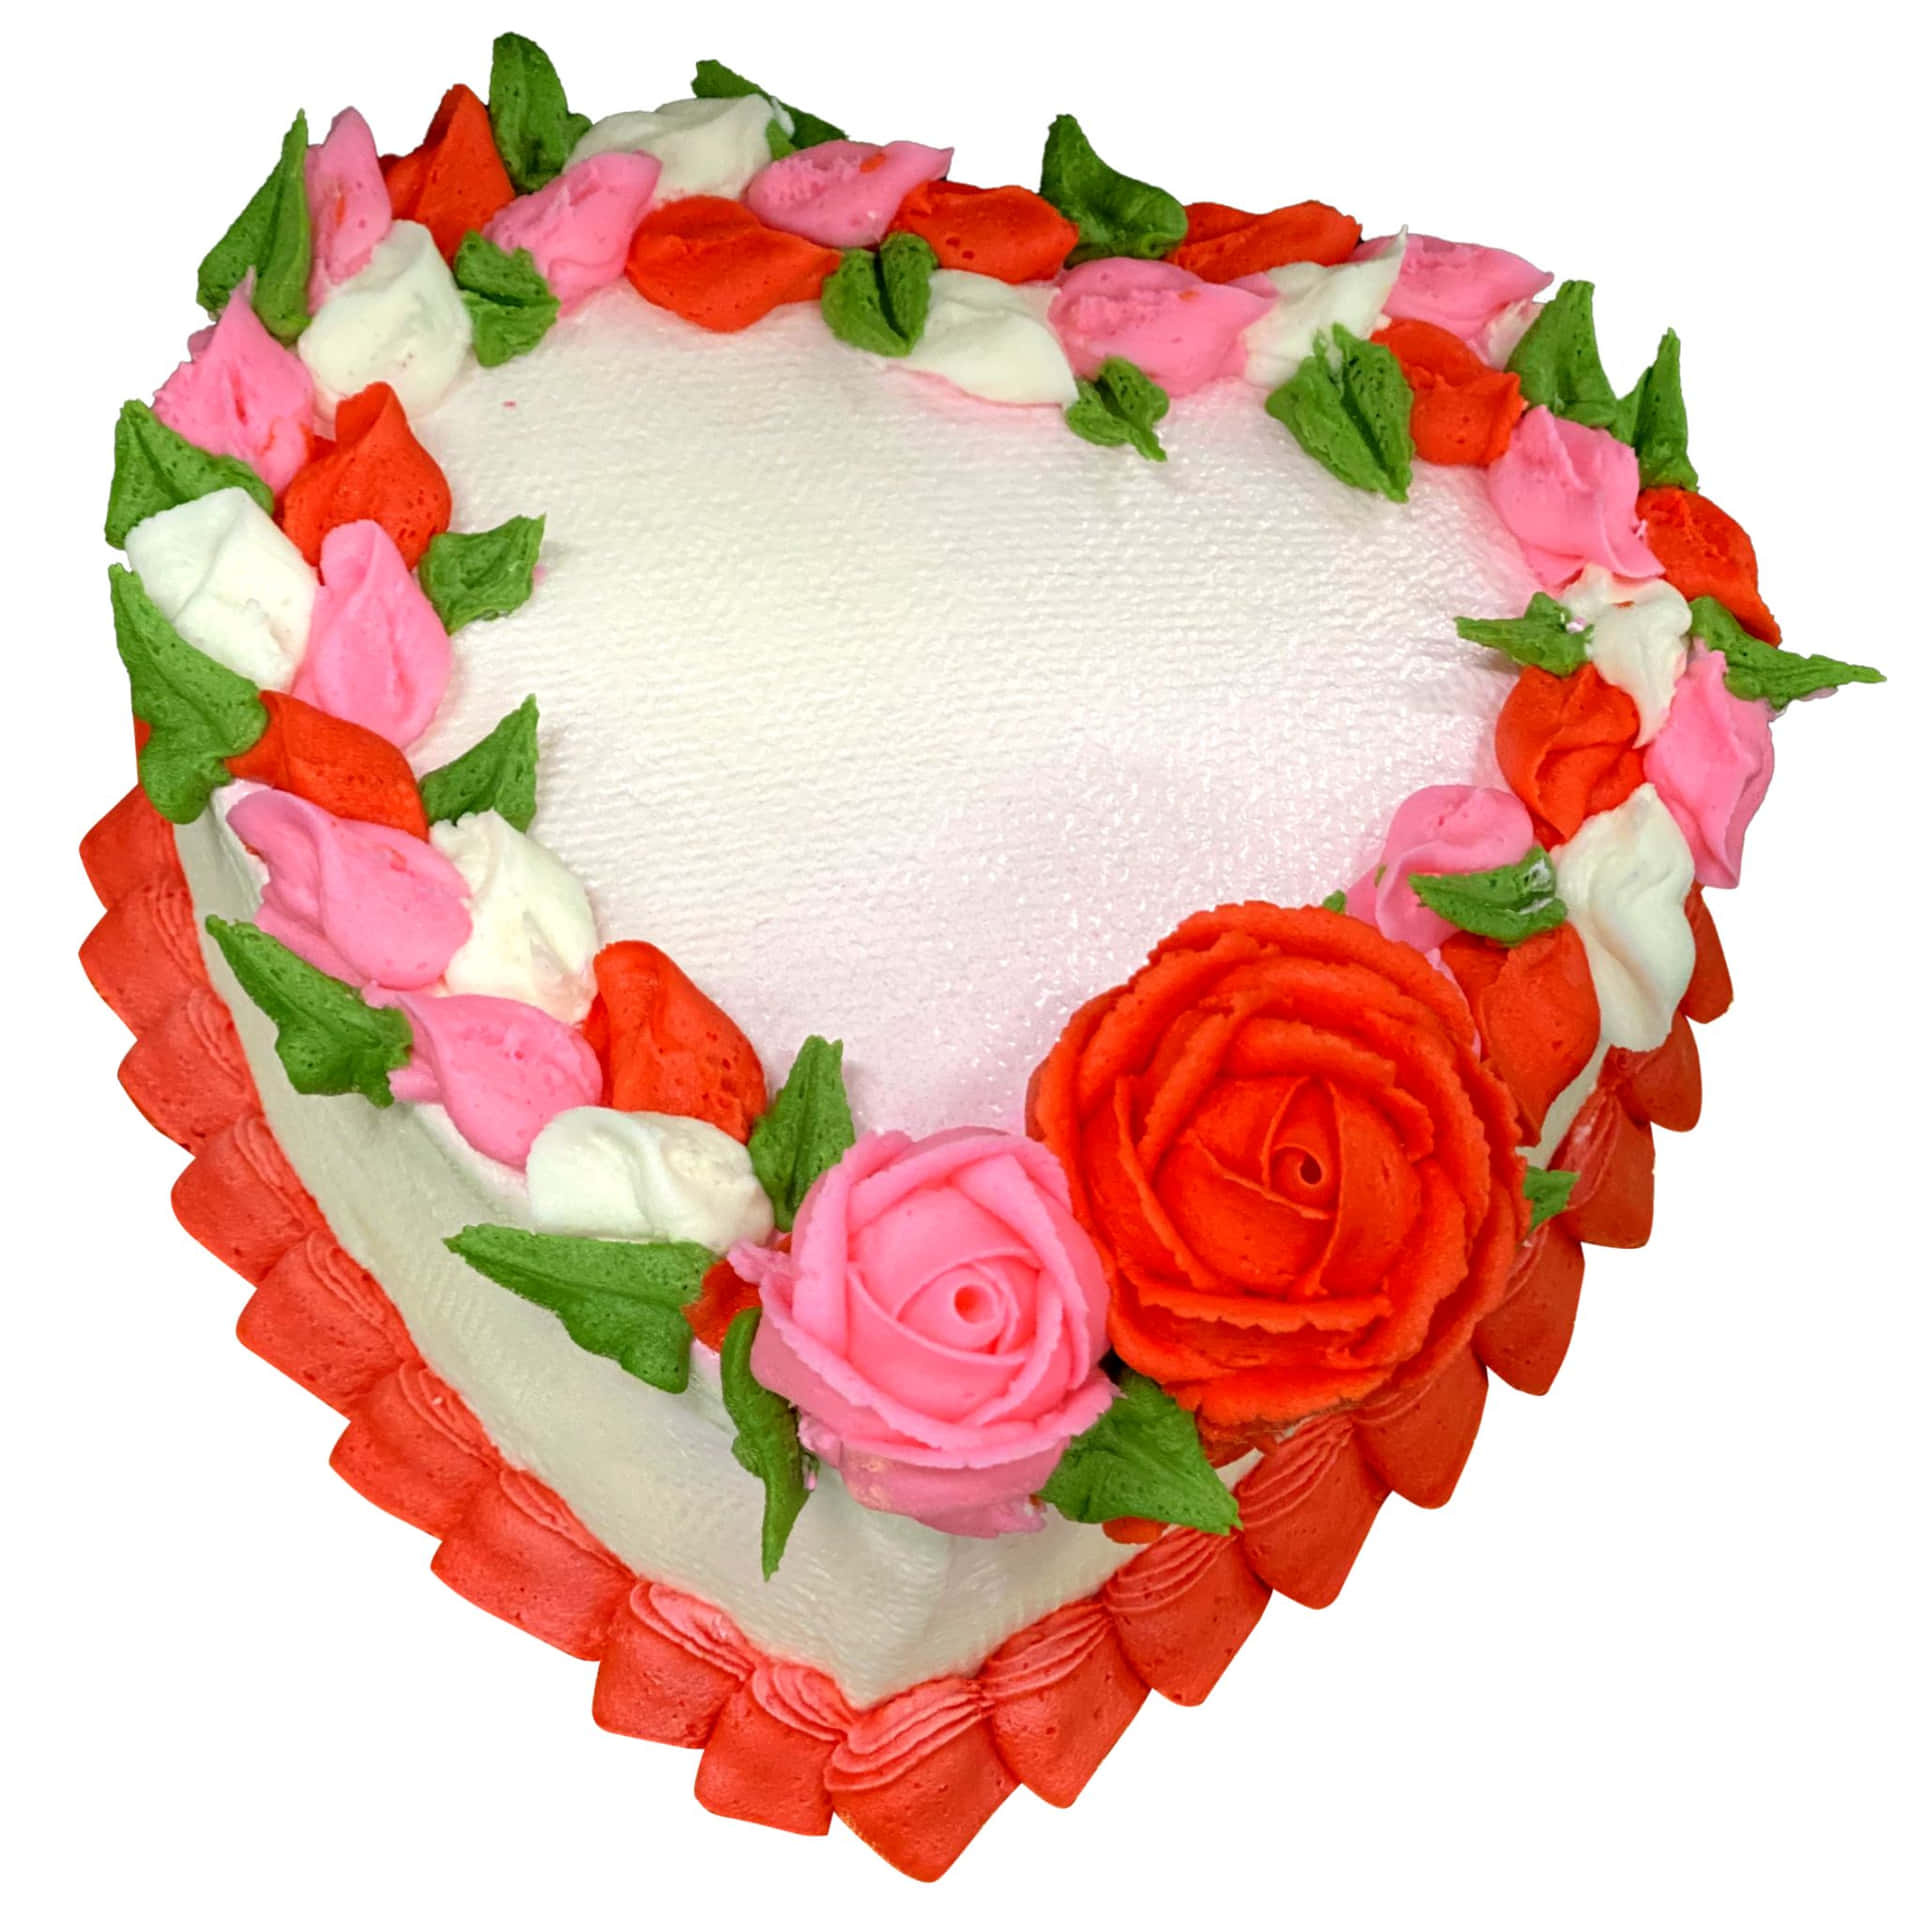 Delightful Floral Cake on Display Wallpaper